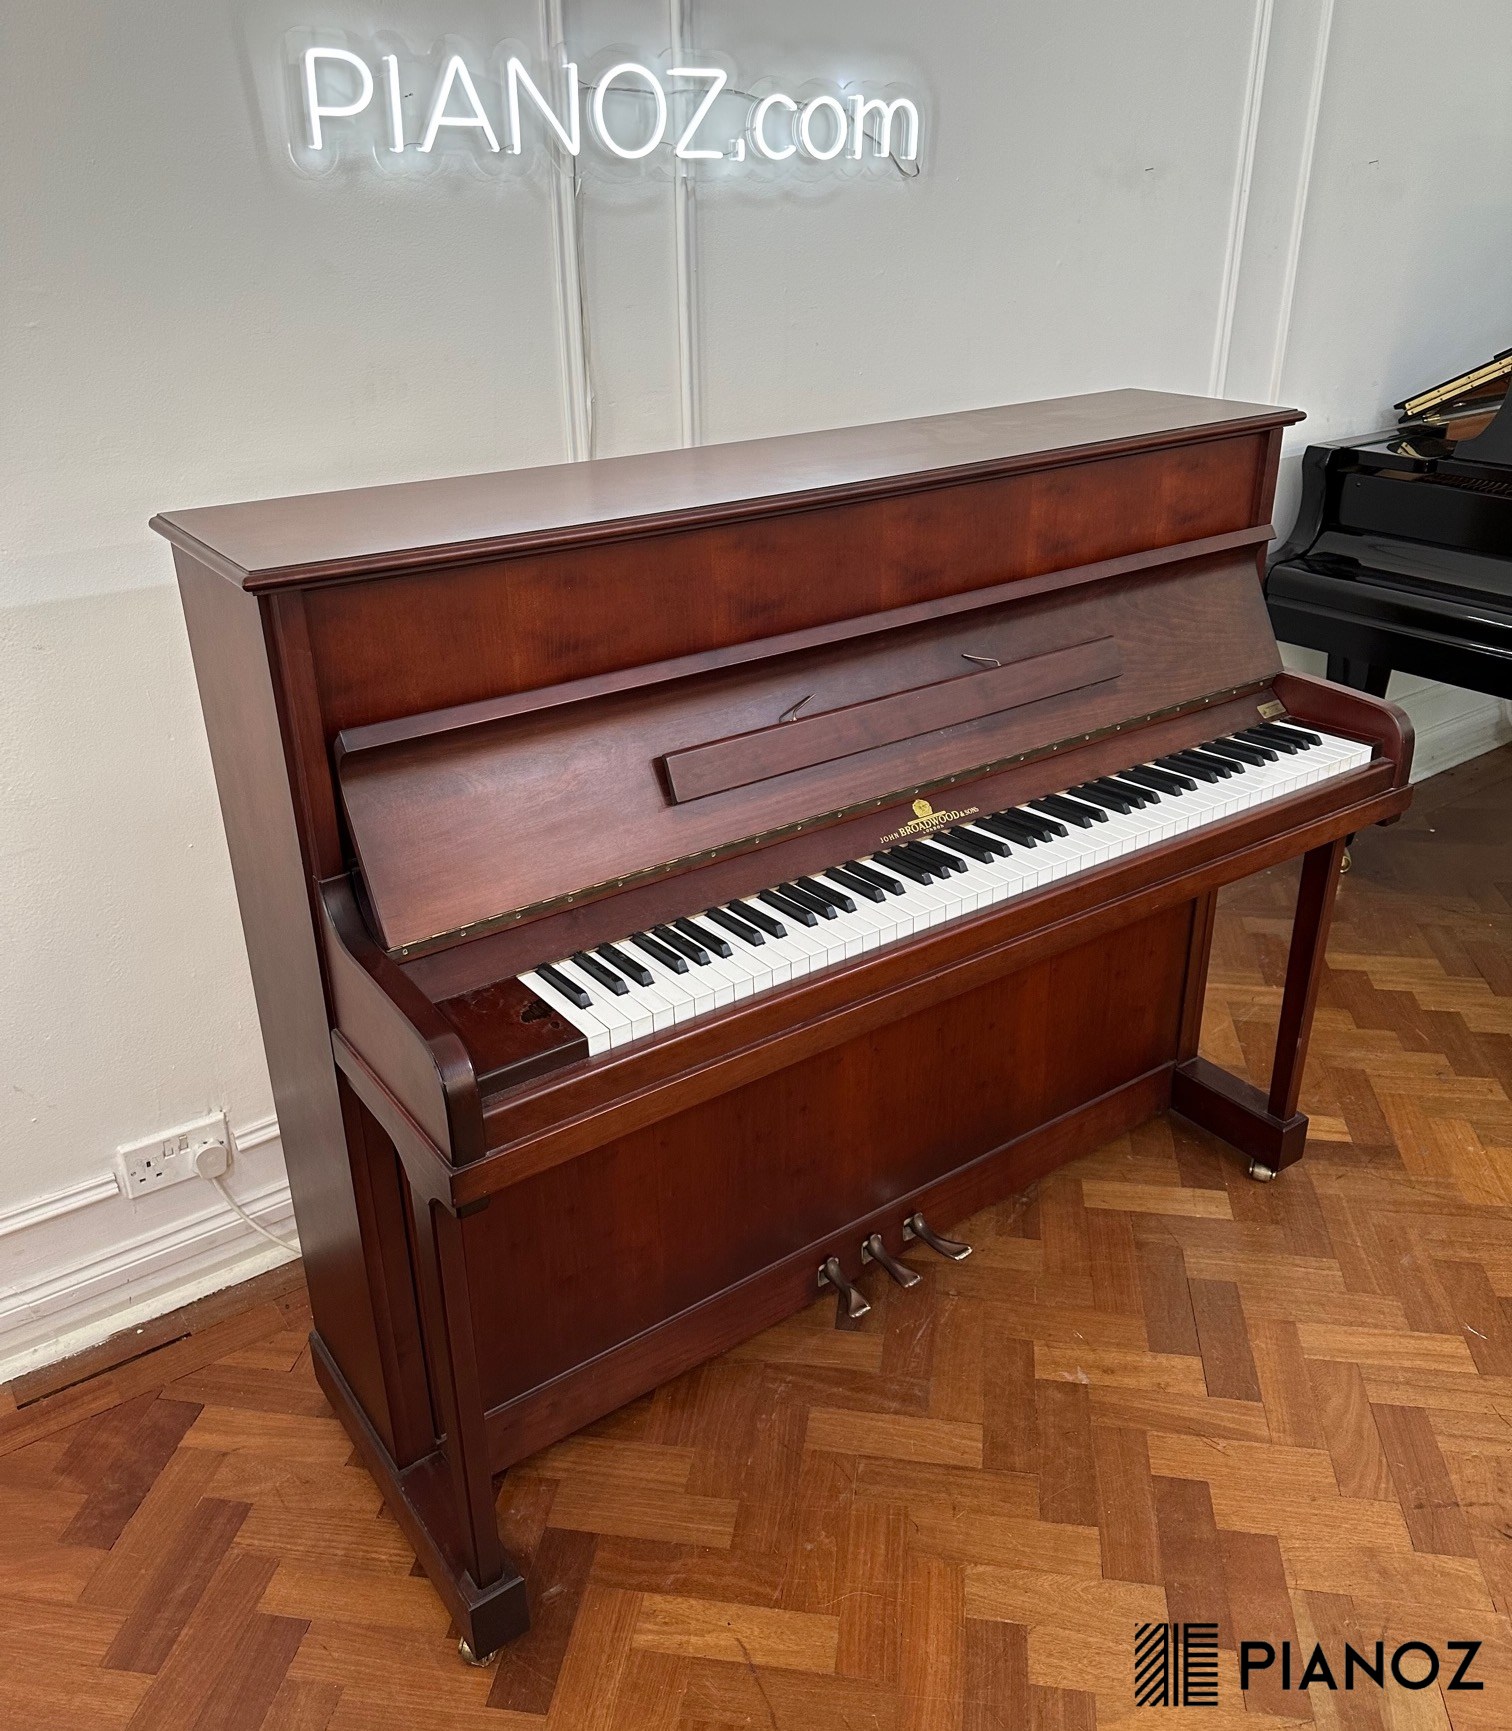 Broadwood Modern Upright Piano piano for sale in UK